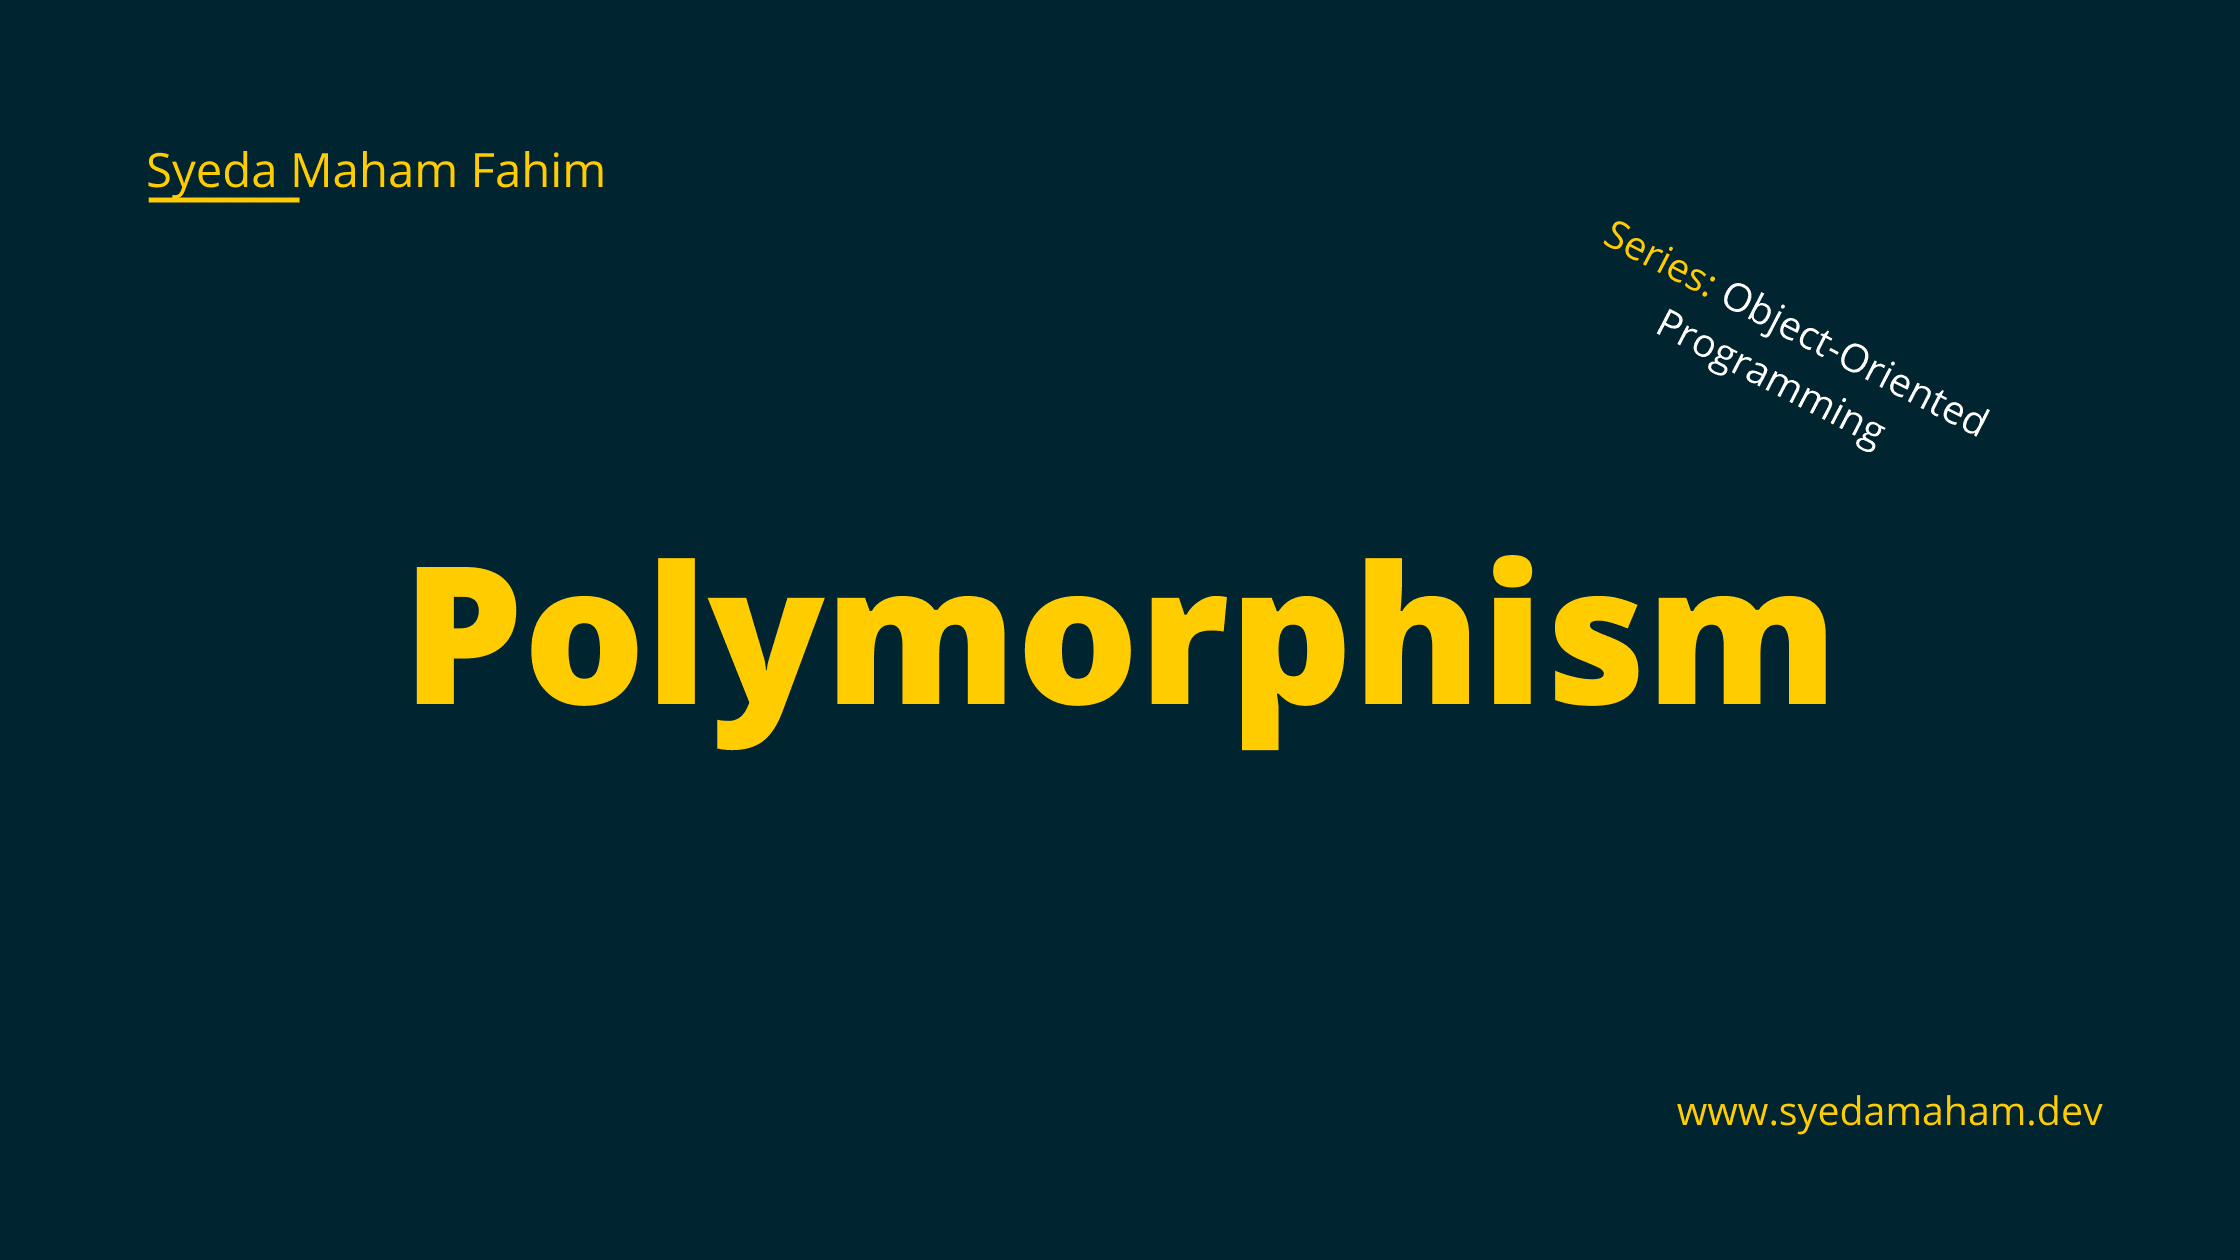 Polymorphism